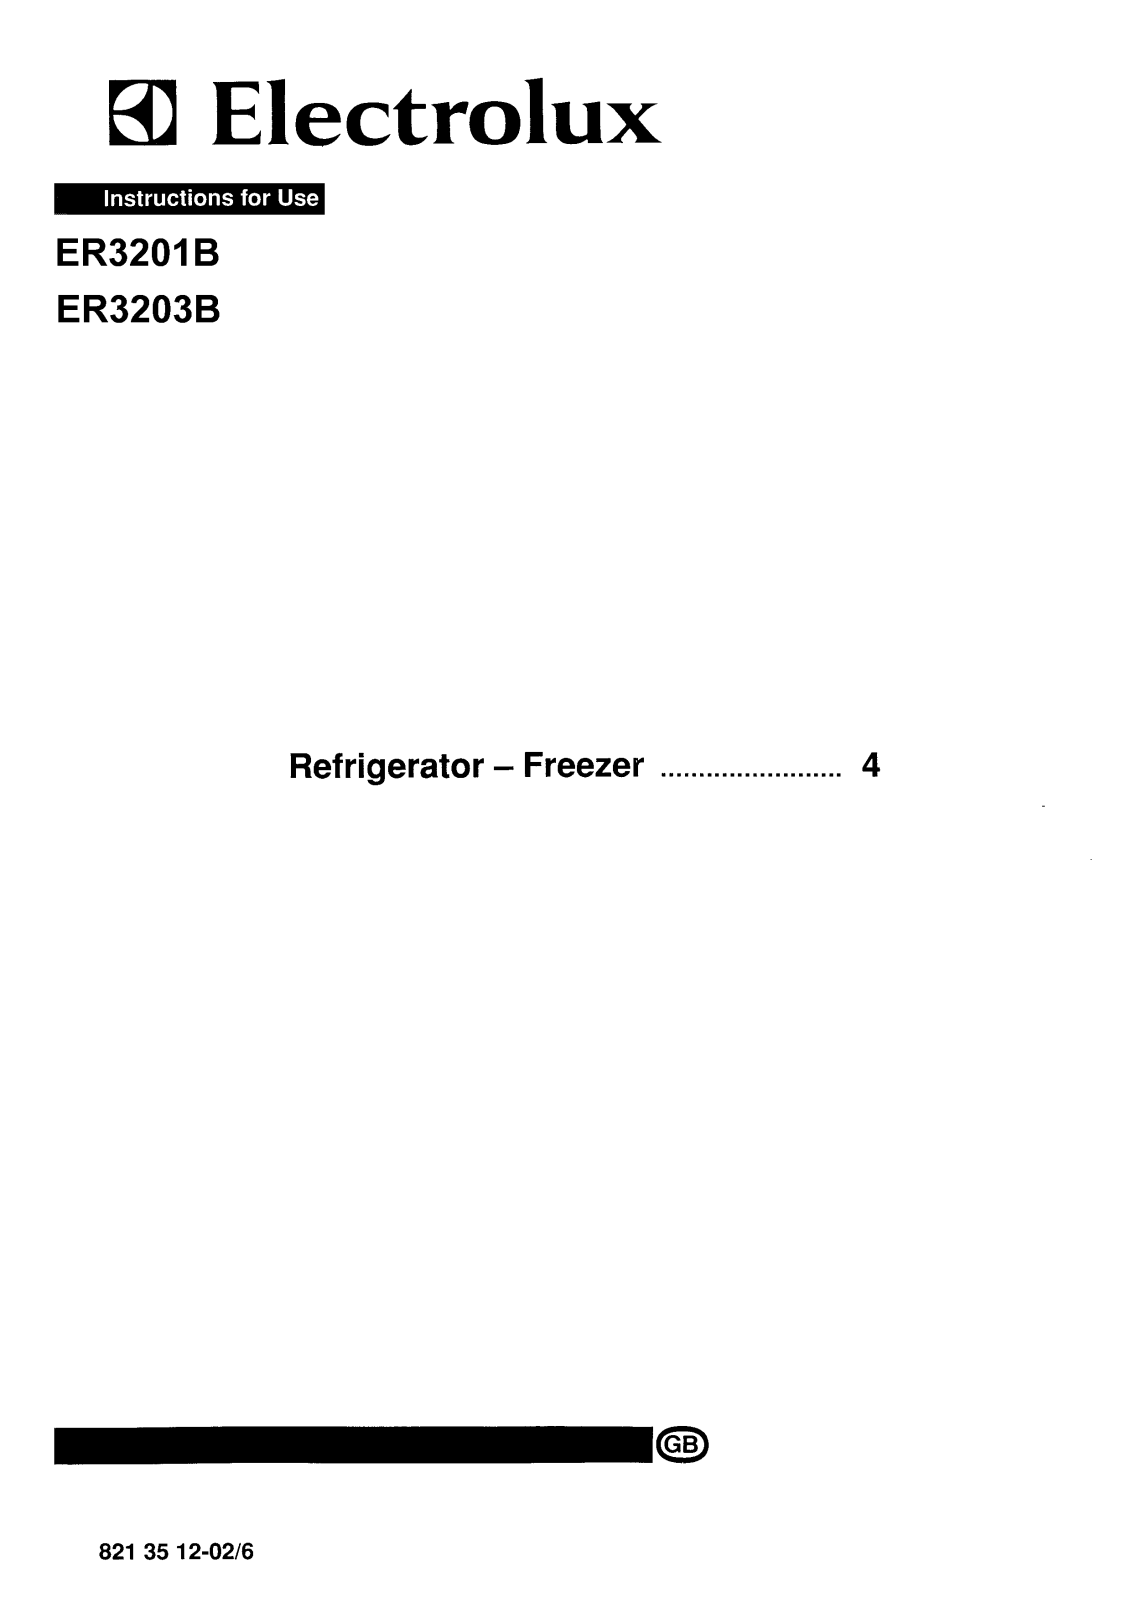 Electrolux ER3201B, ER3203B User Manual